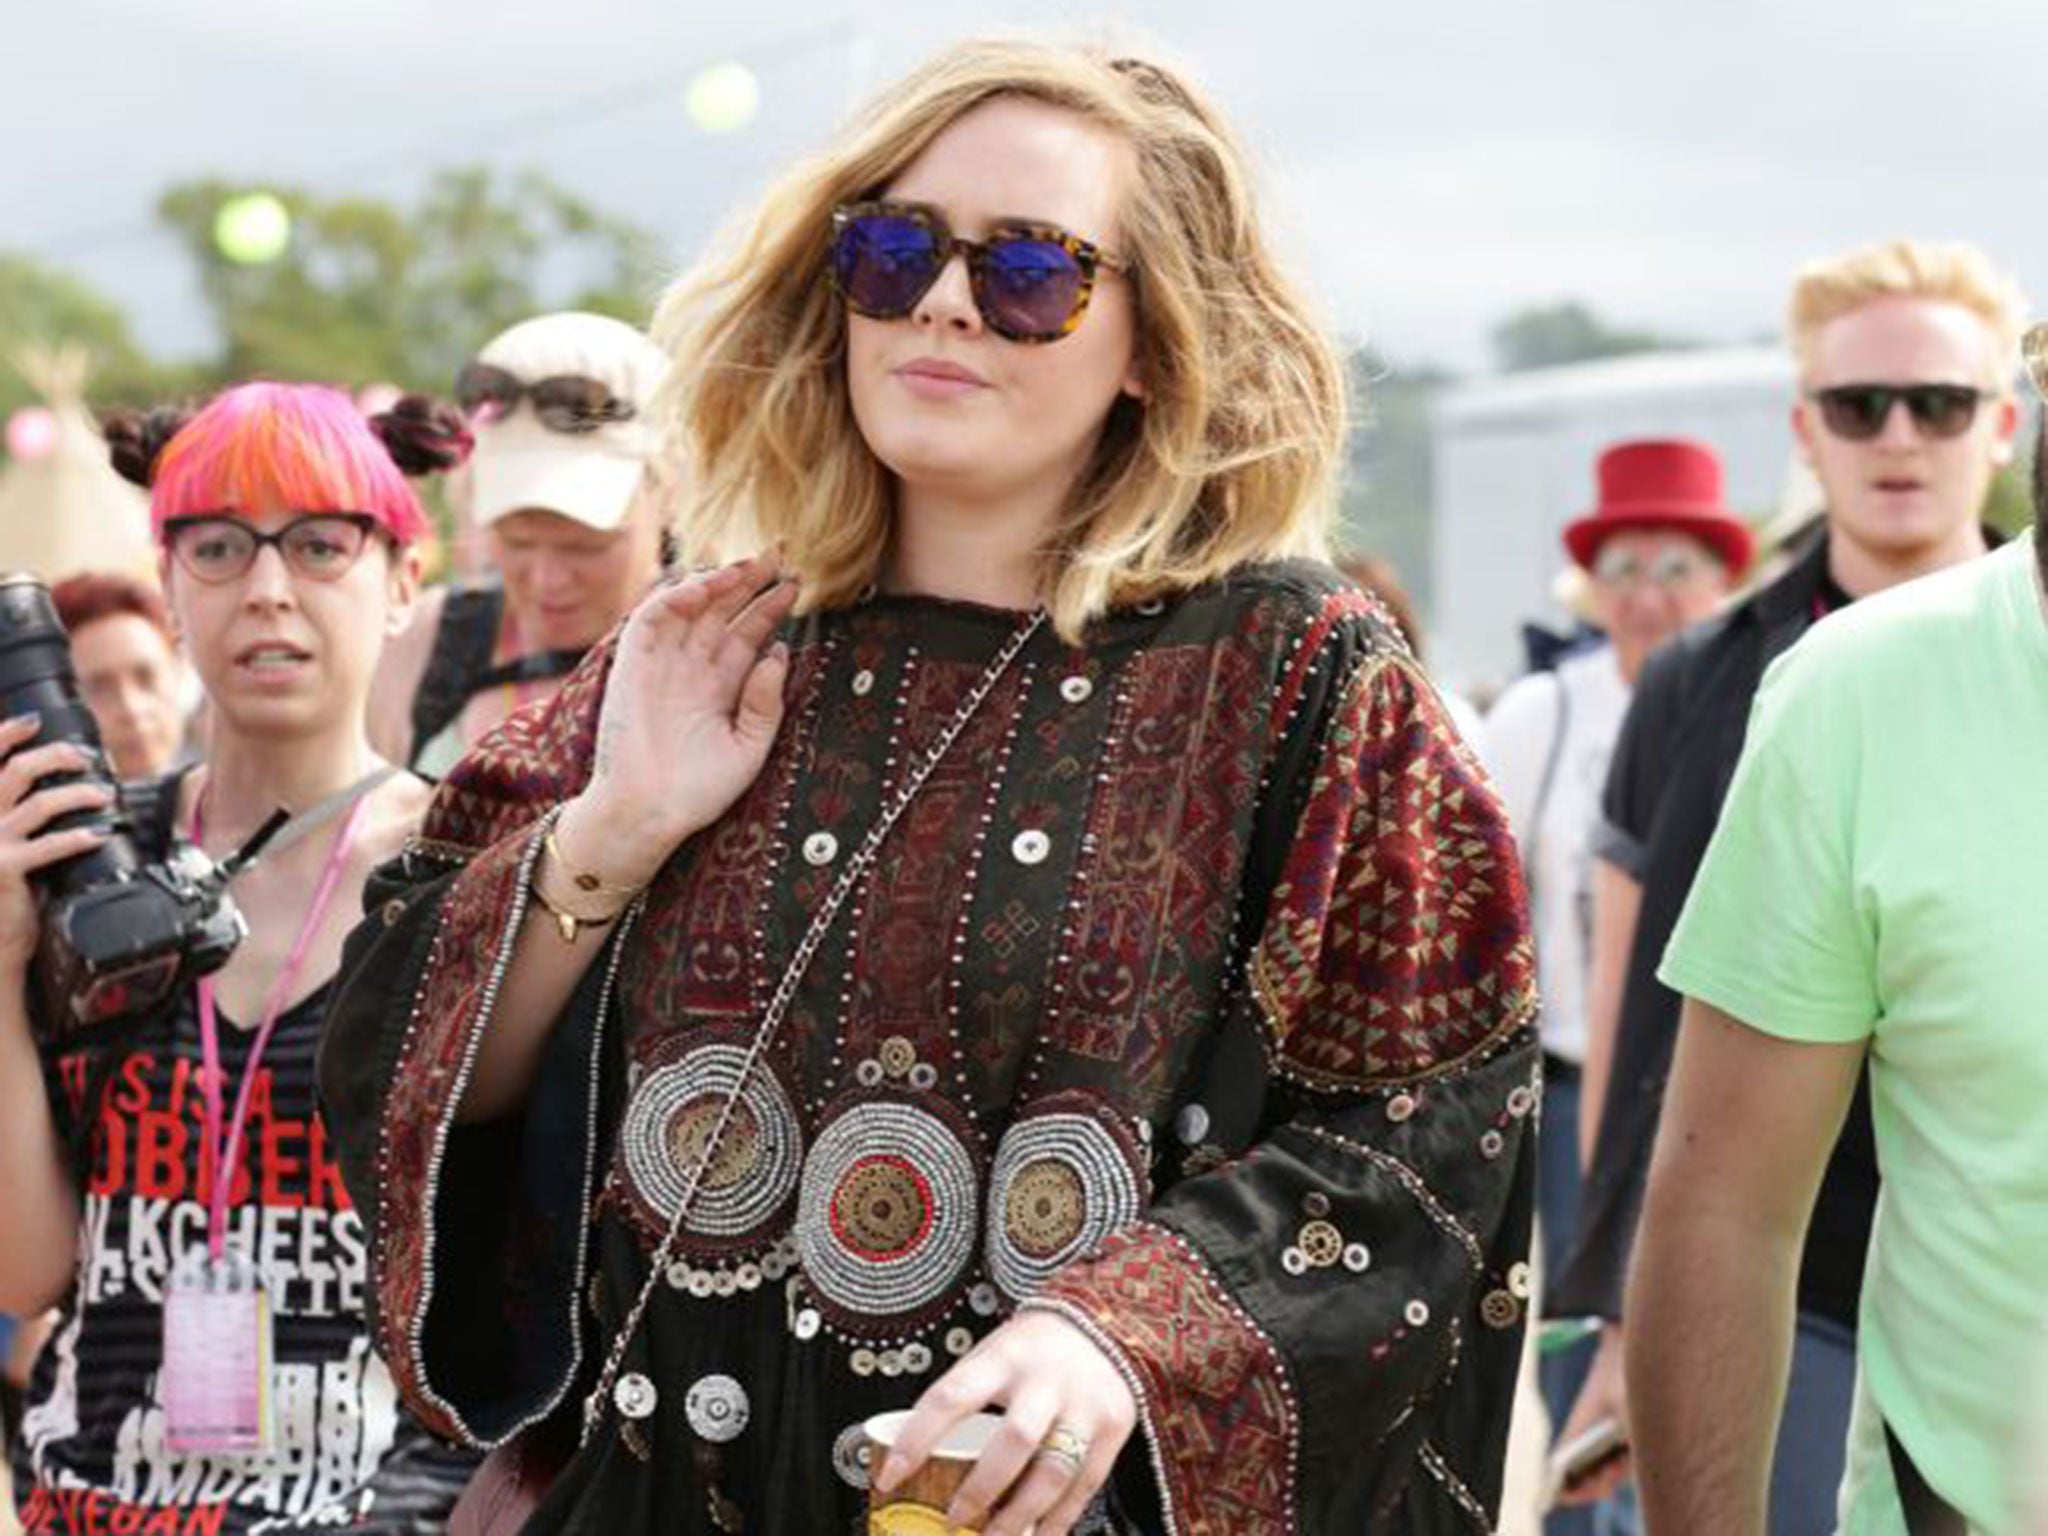 Adele backstage during Glastonbury Music Festival on Saturday, June 27